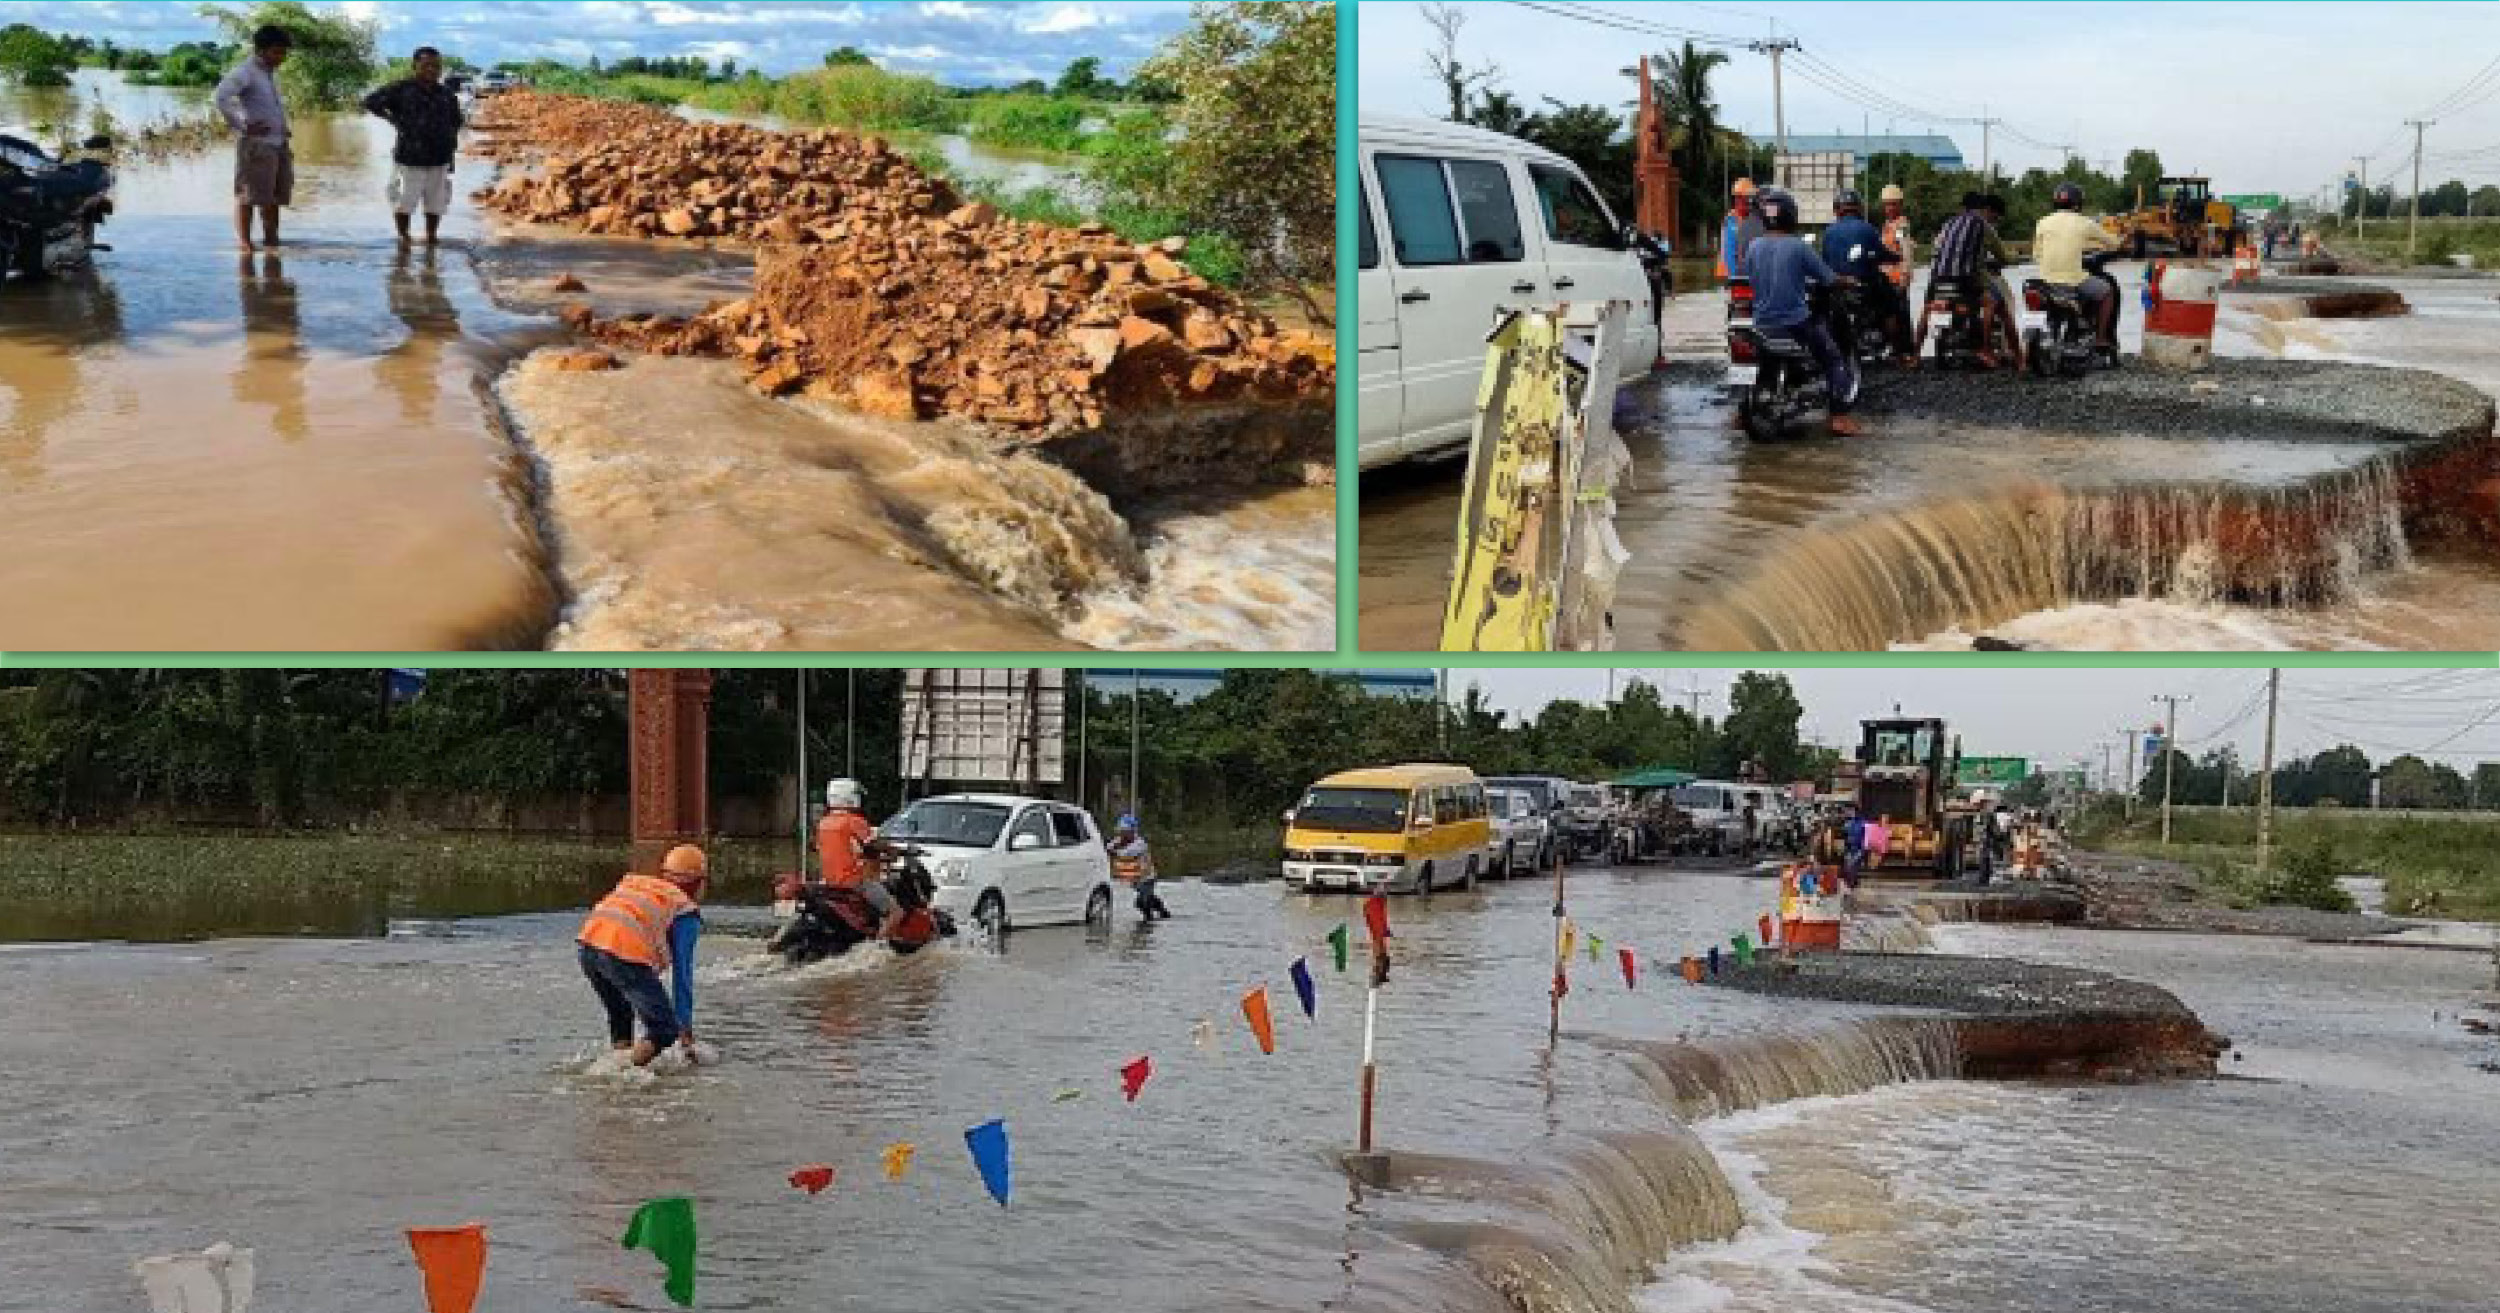 US$91 million Needed to Fix Flood-damaged Roads